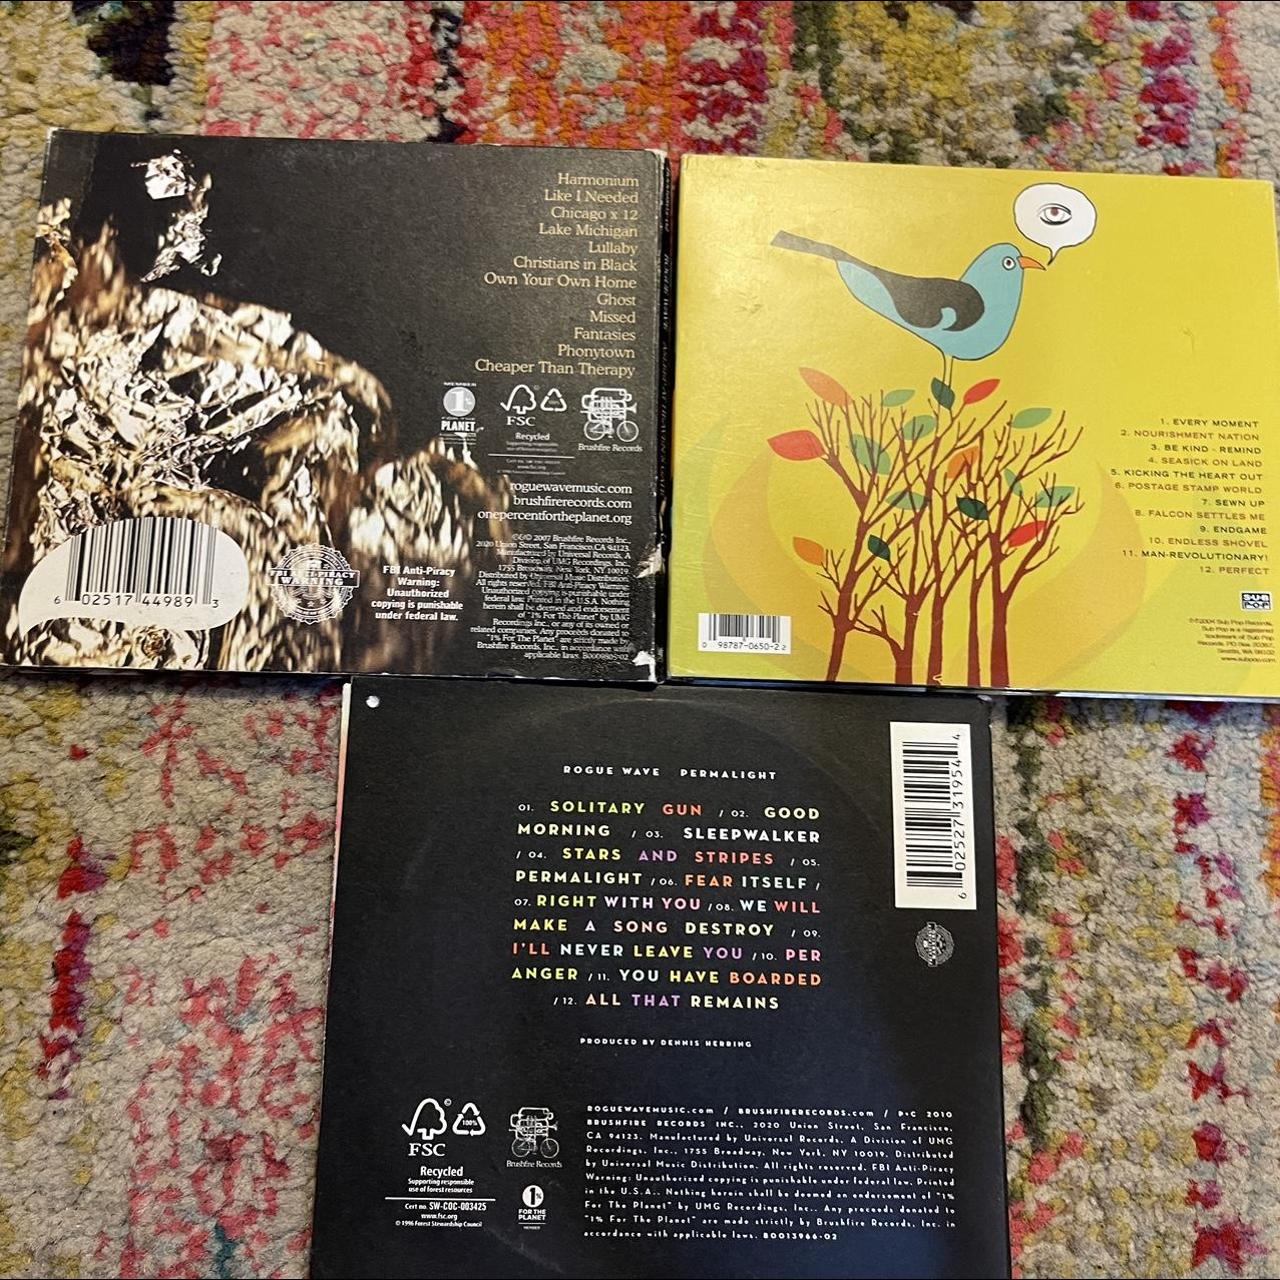  The Endgame: CDs & Vinyl